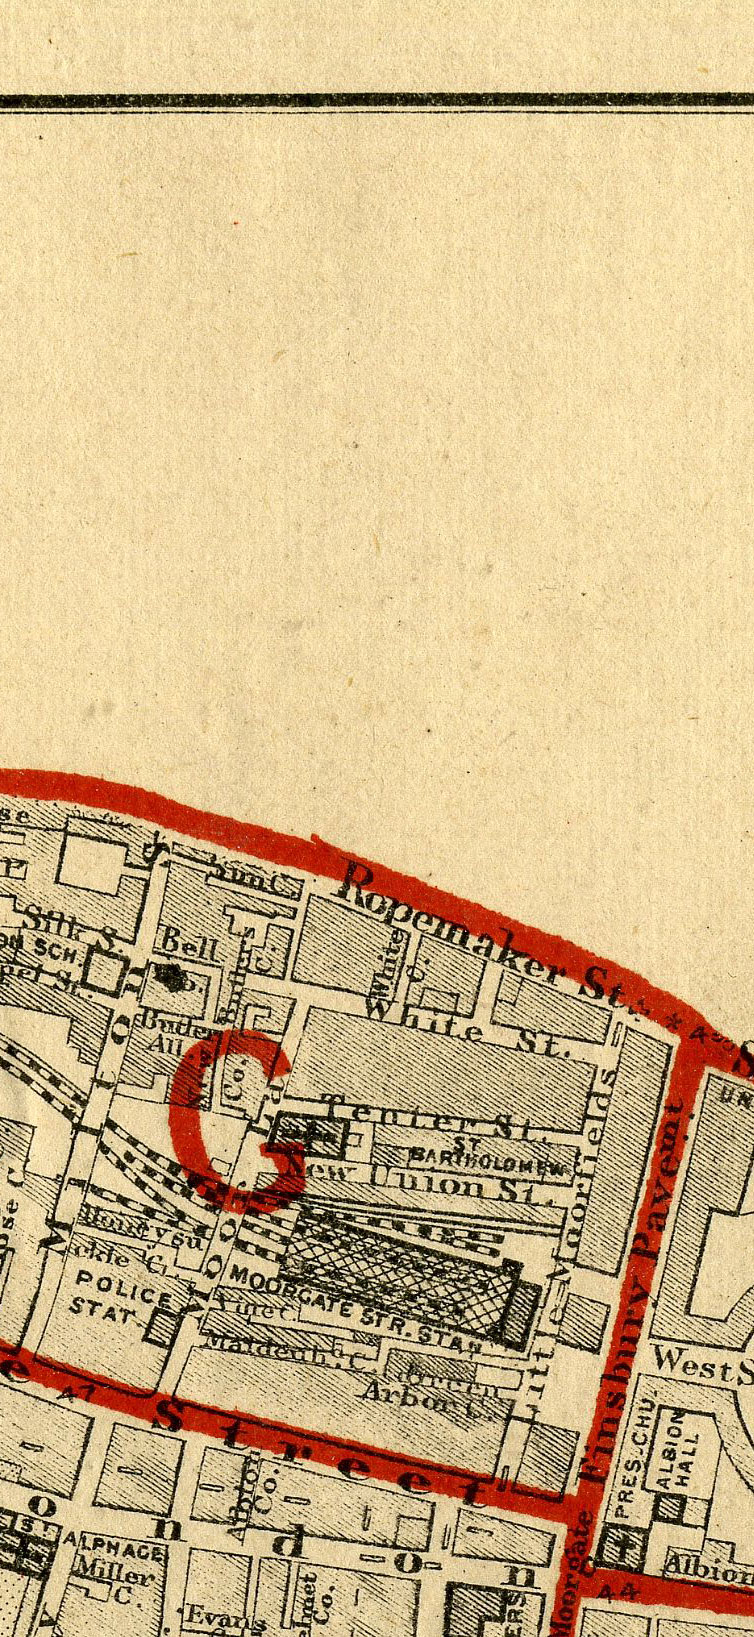 Stanford's School Board Map - City Of London 1877